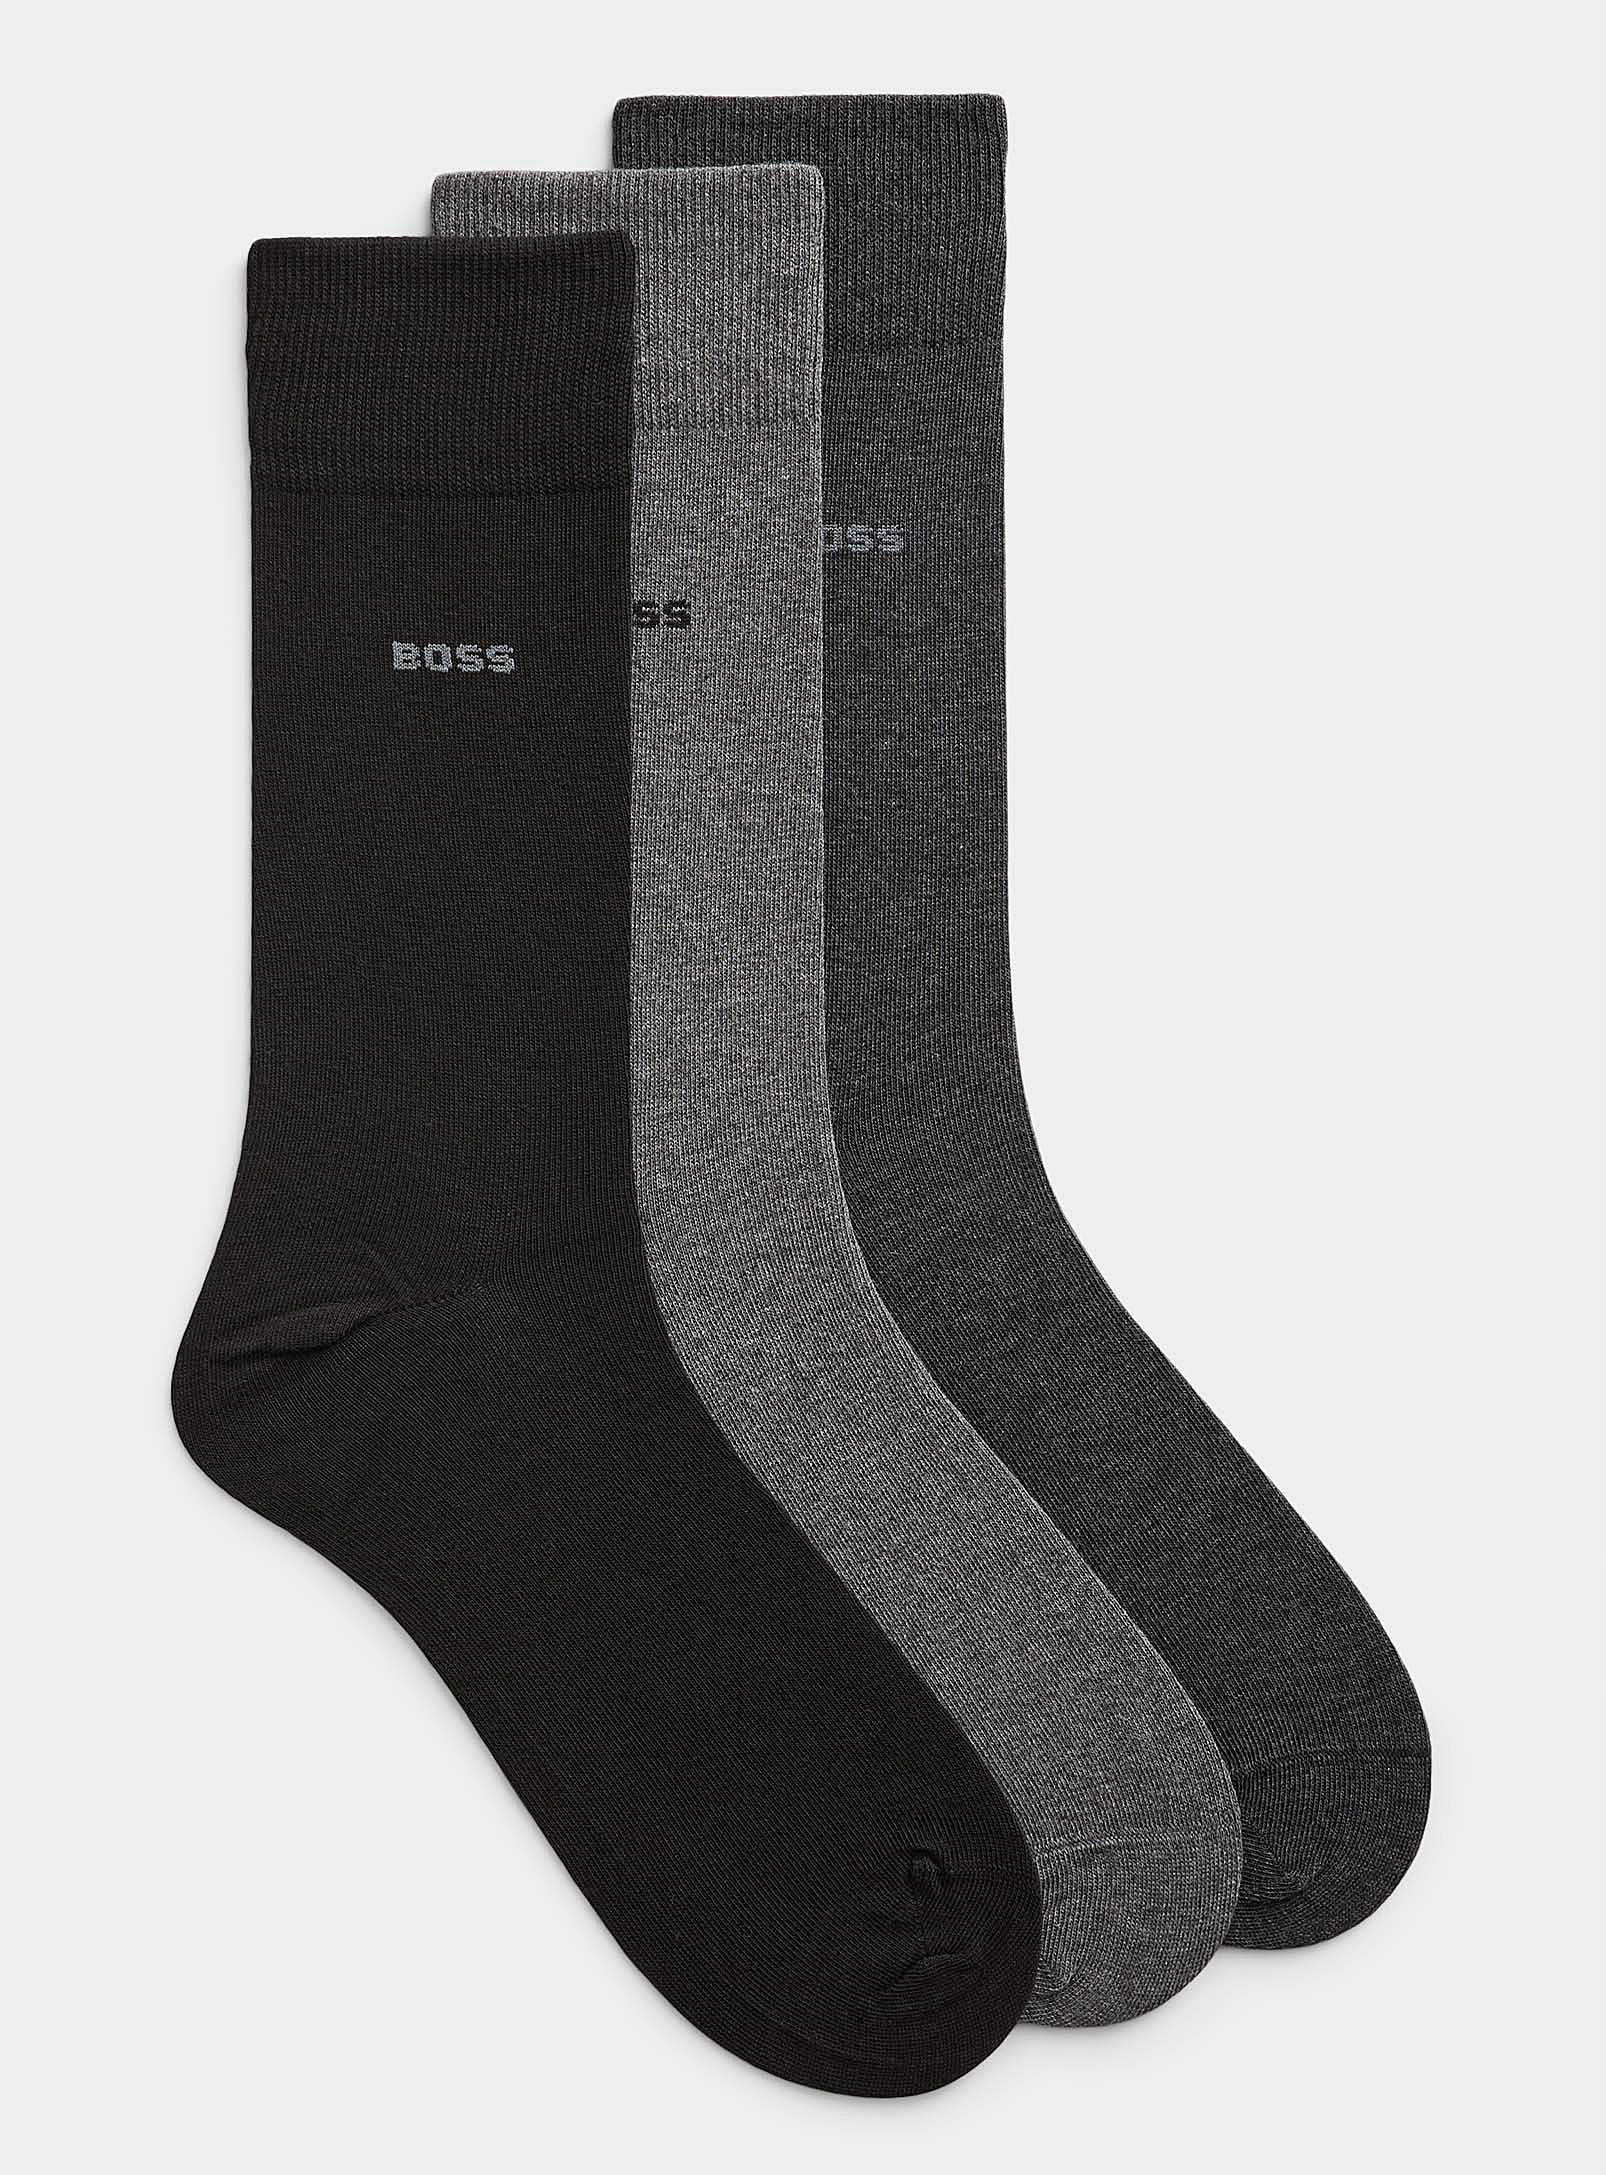 Hugo Boss Neutral Dress Socks 3-pack In Patterned Grey